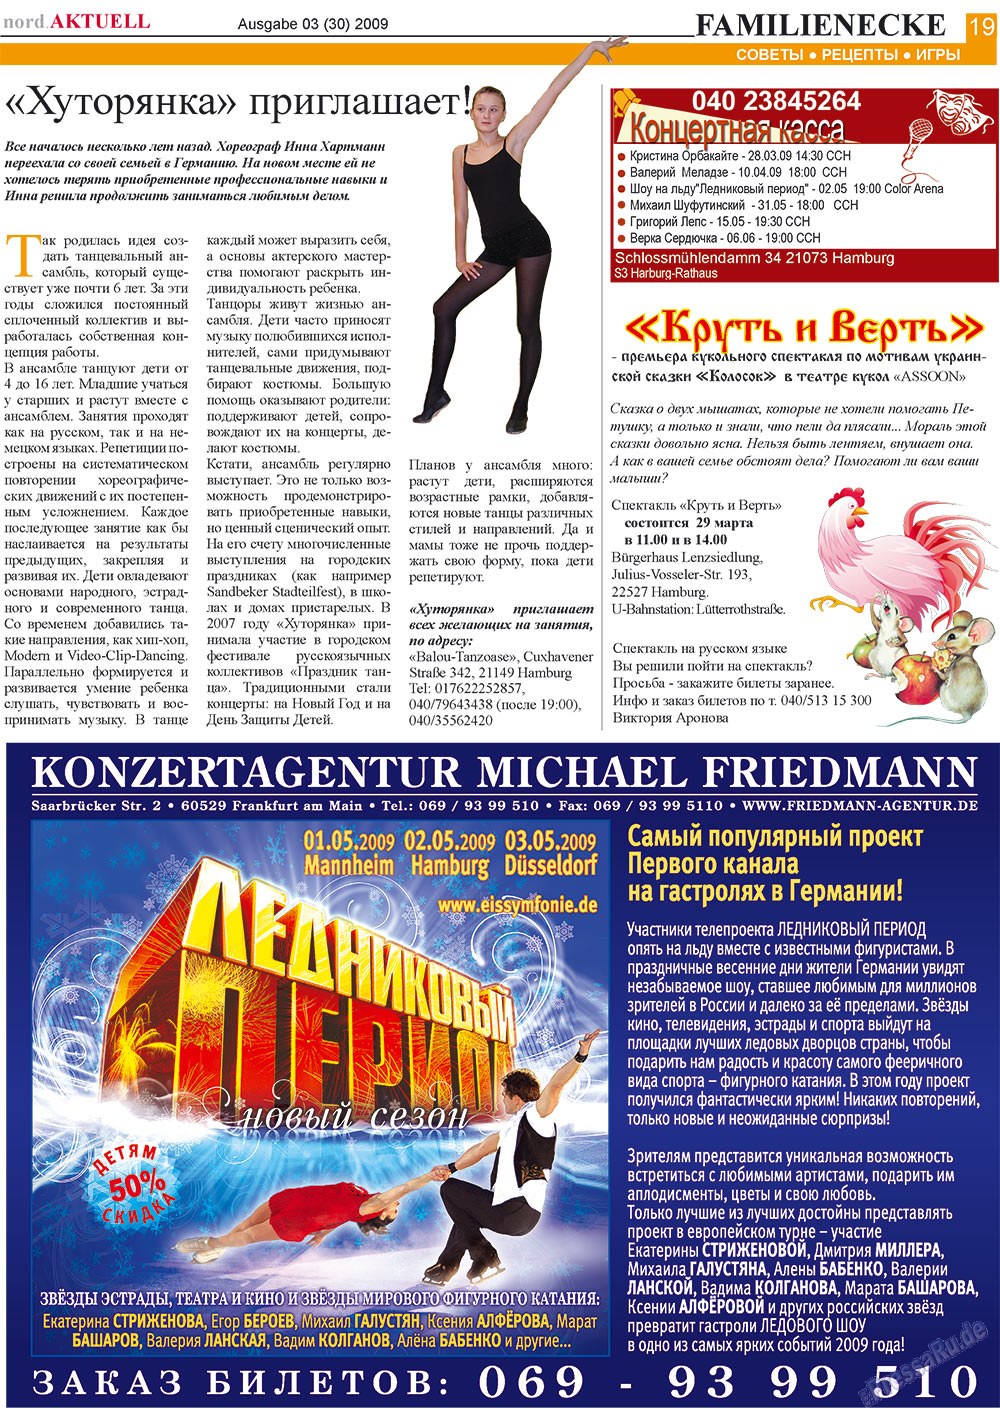 nord.Aktuell (газета). 2009 год, номер 3, стр. 19